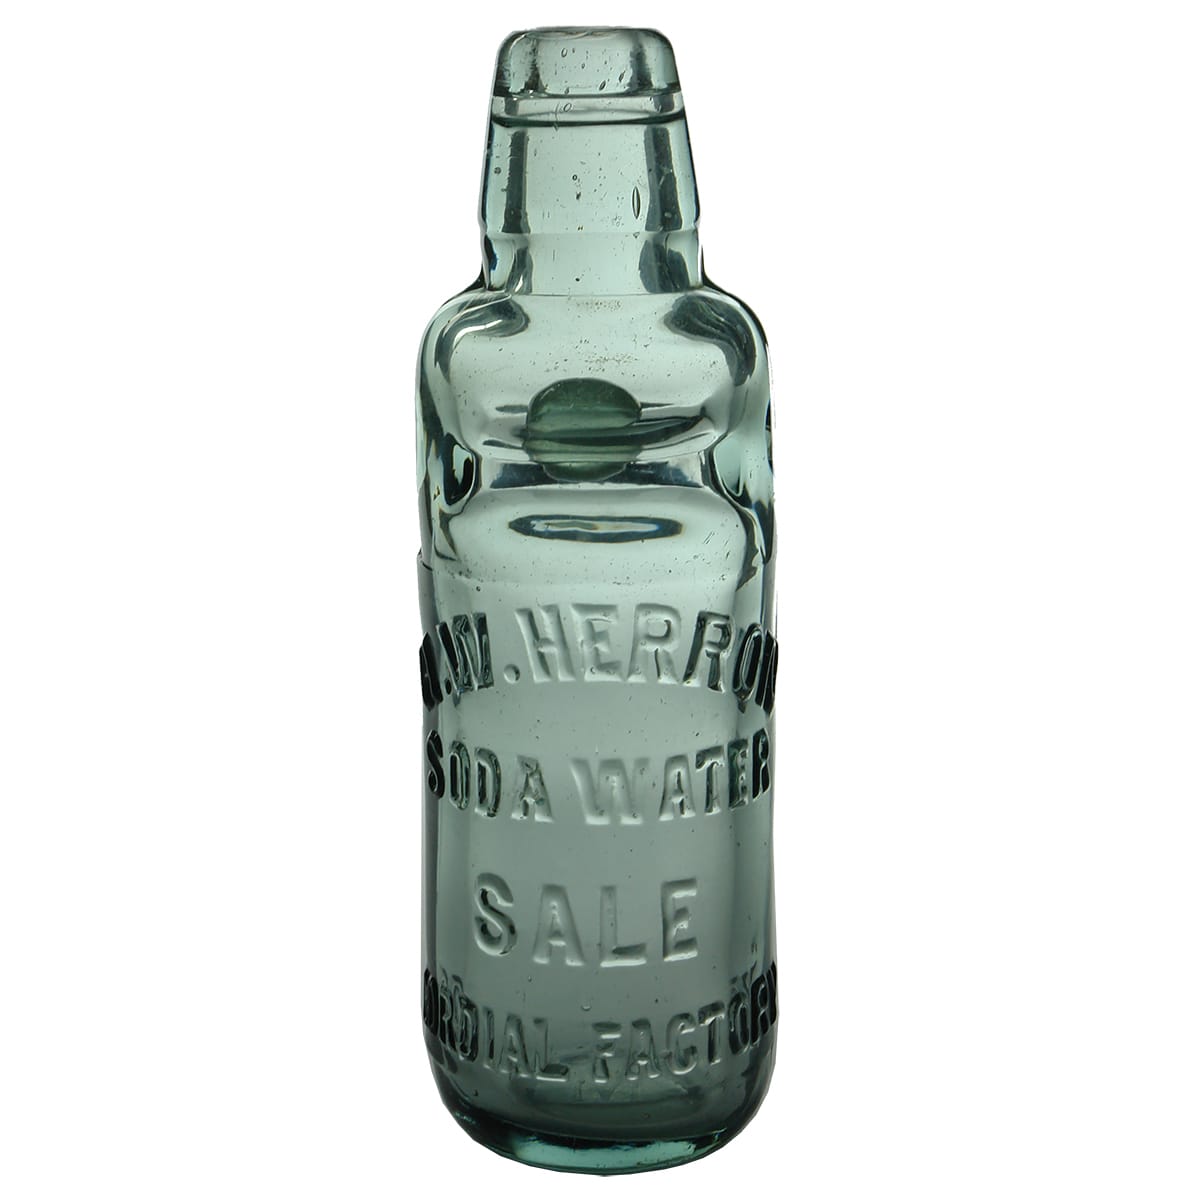 Codd. Herron, Sale. Soda Water. All Way Pour. Grey/Aqua. 6 oz. (Victoria)